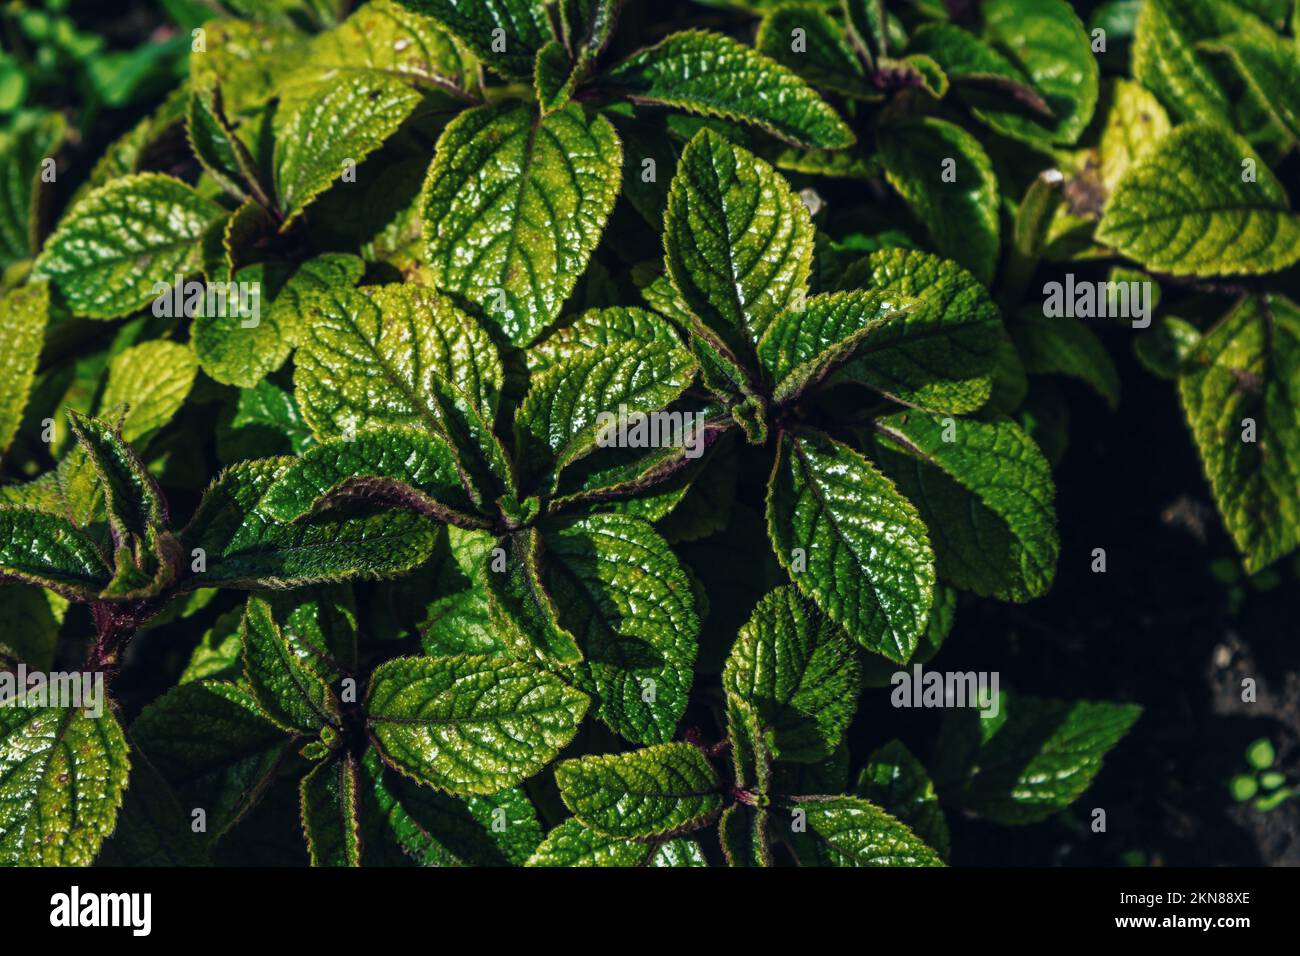 Plectranthus purpuratus or Swedish ivy - decorative mint, hybrid plant, abstract natural background Stock Photo